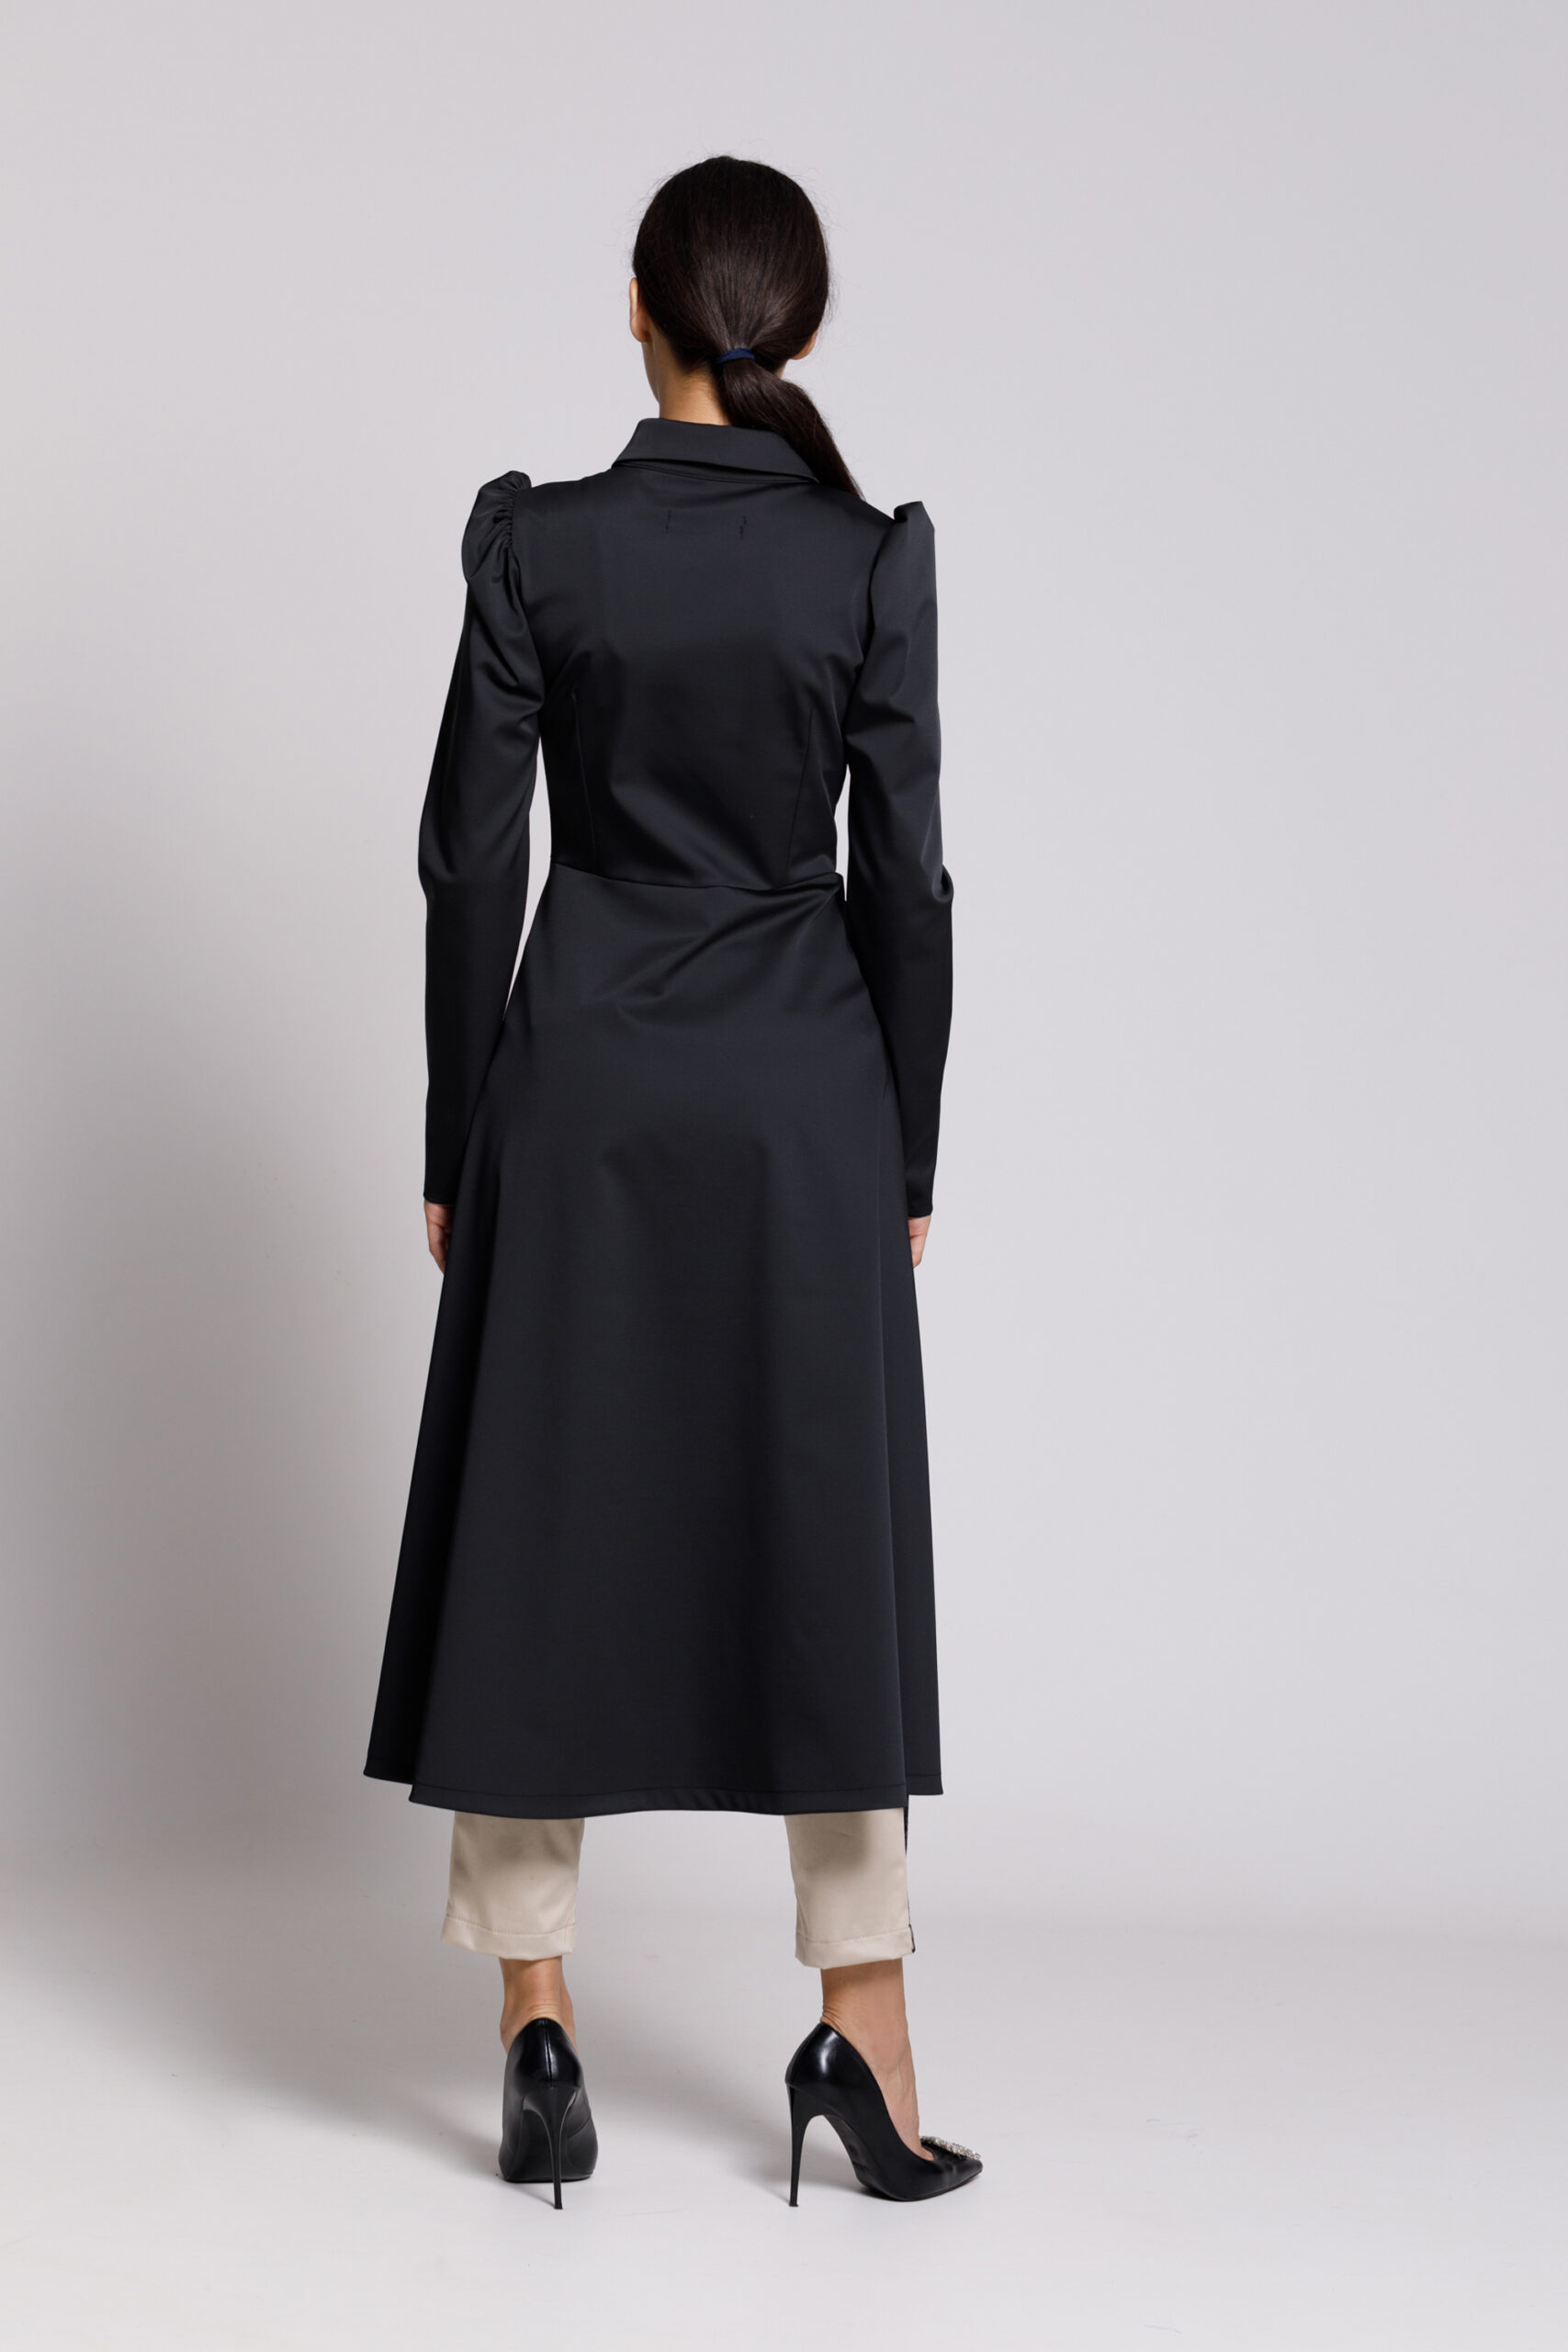 KENZO elegant black tailcoat type jacket. Natural fabrics, original design, handmade embroidery